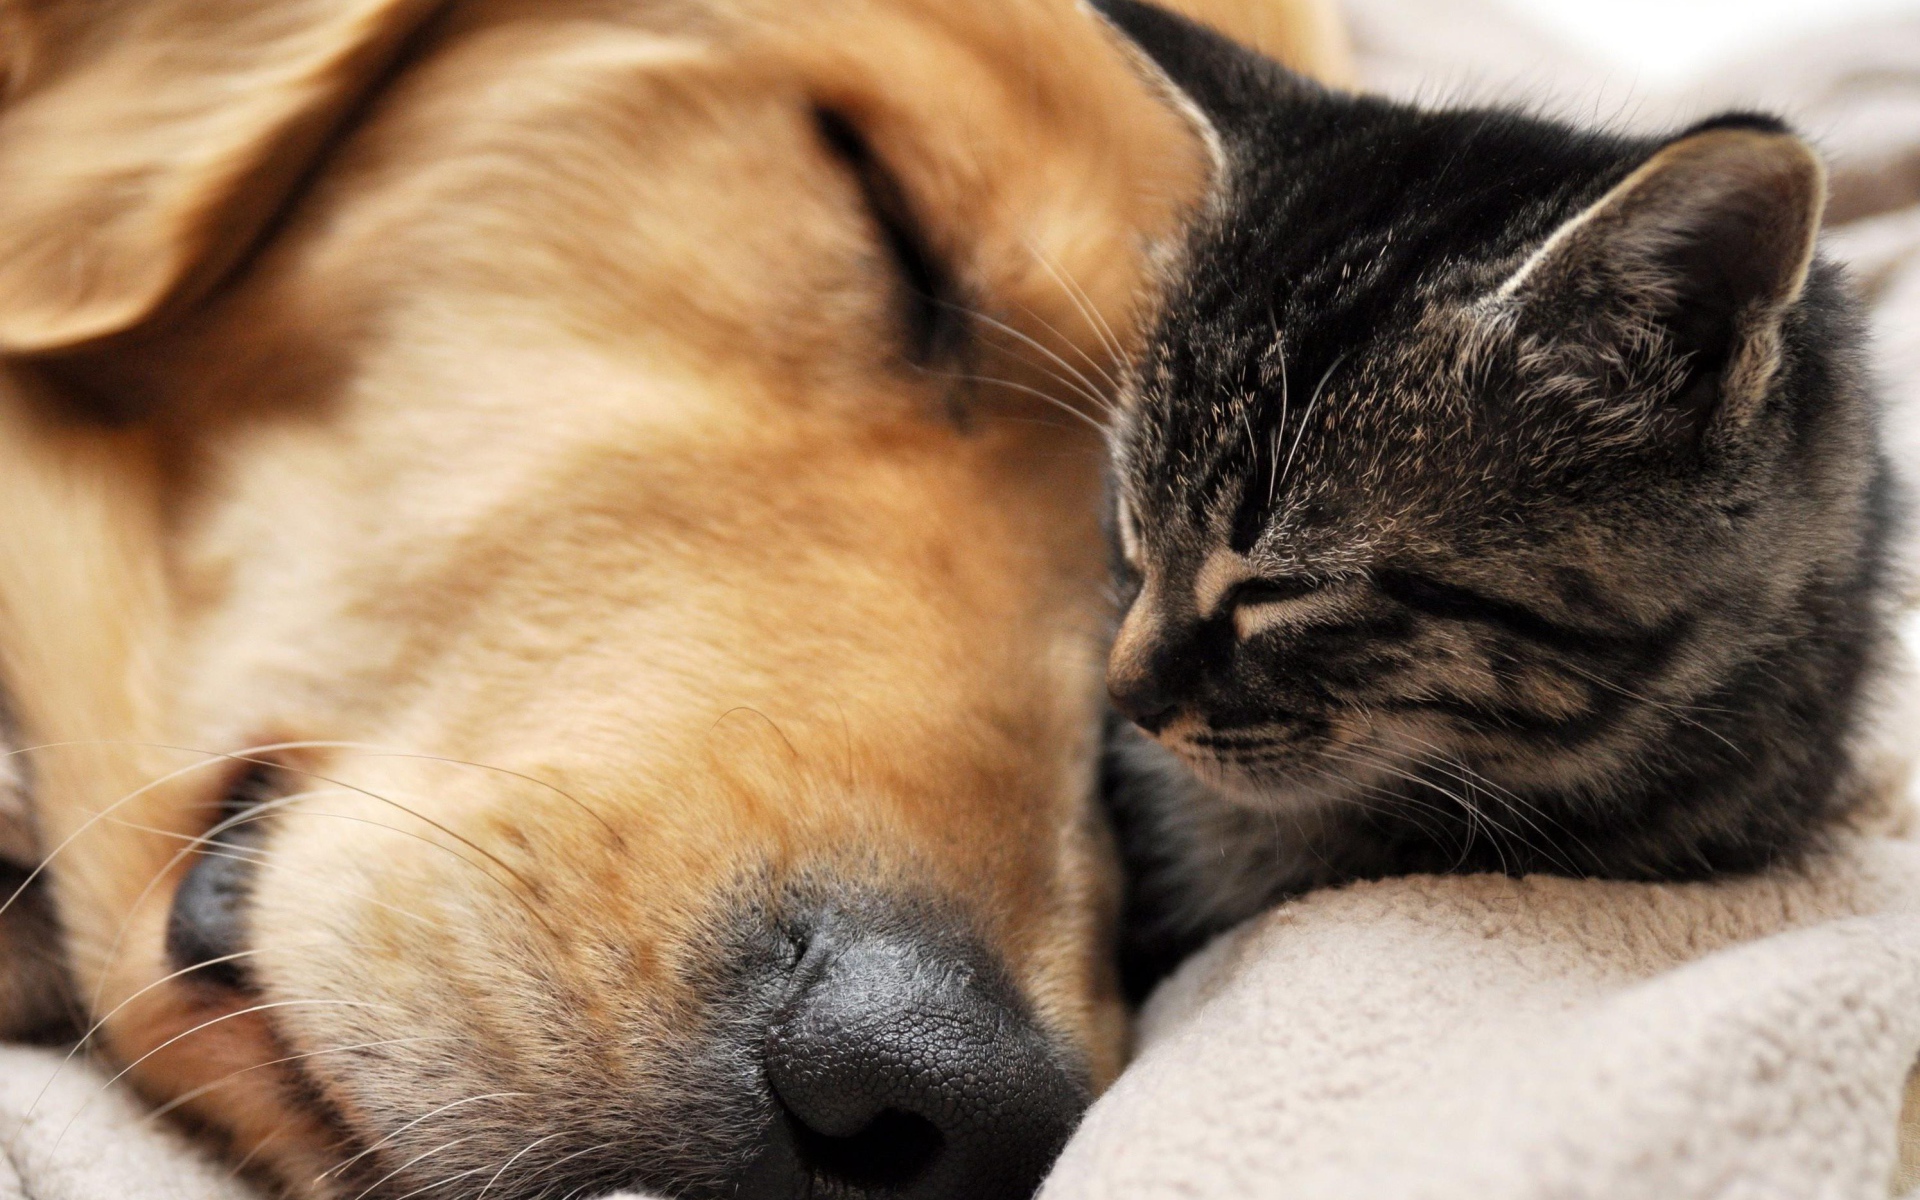 Golden terrier is sleeping with a cat